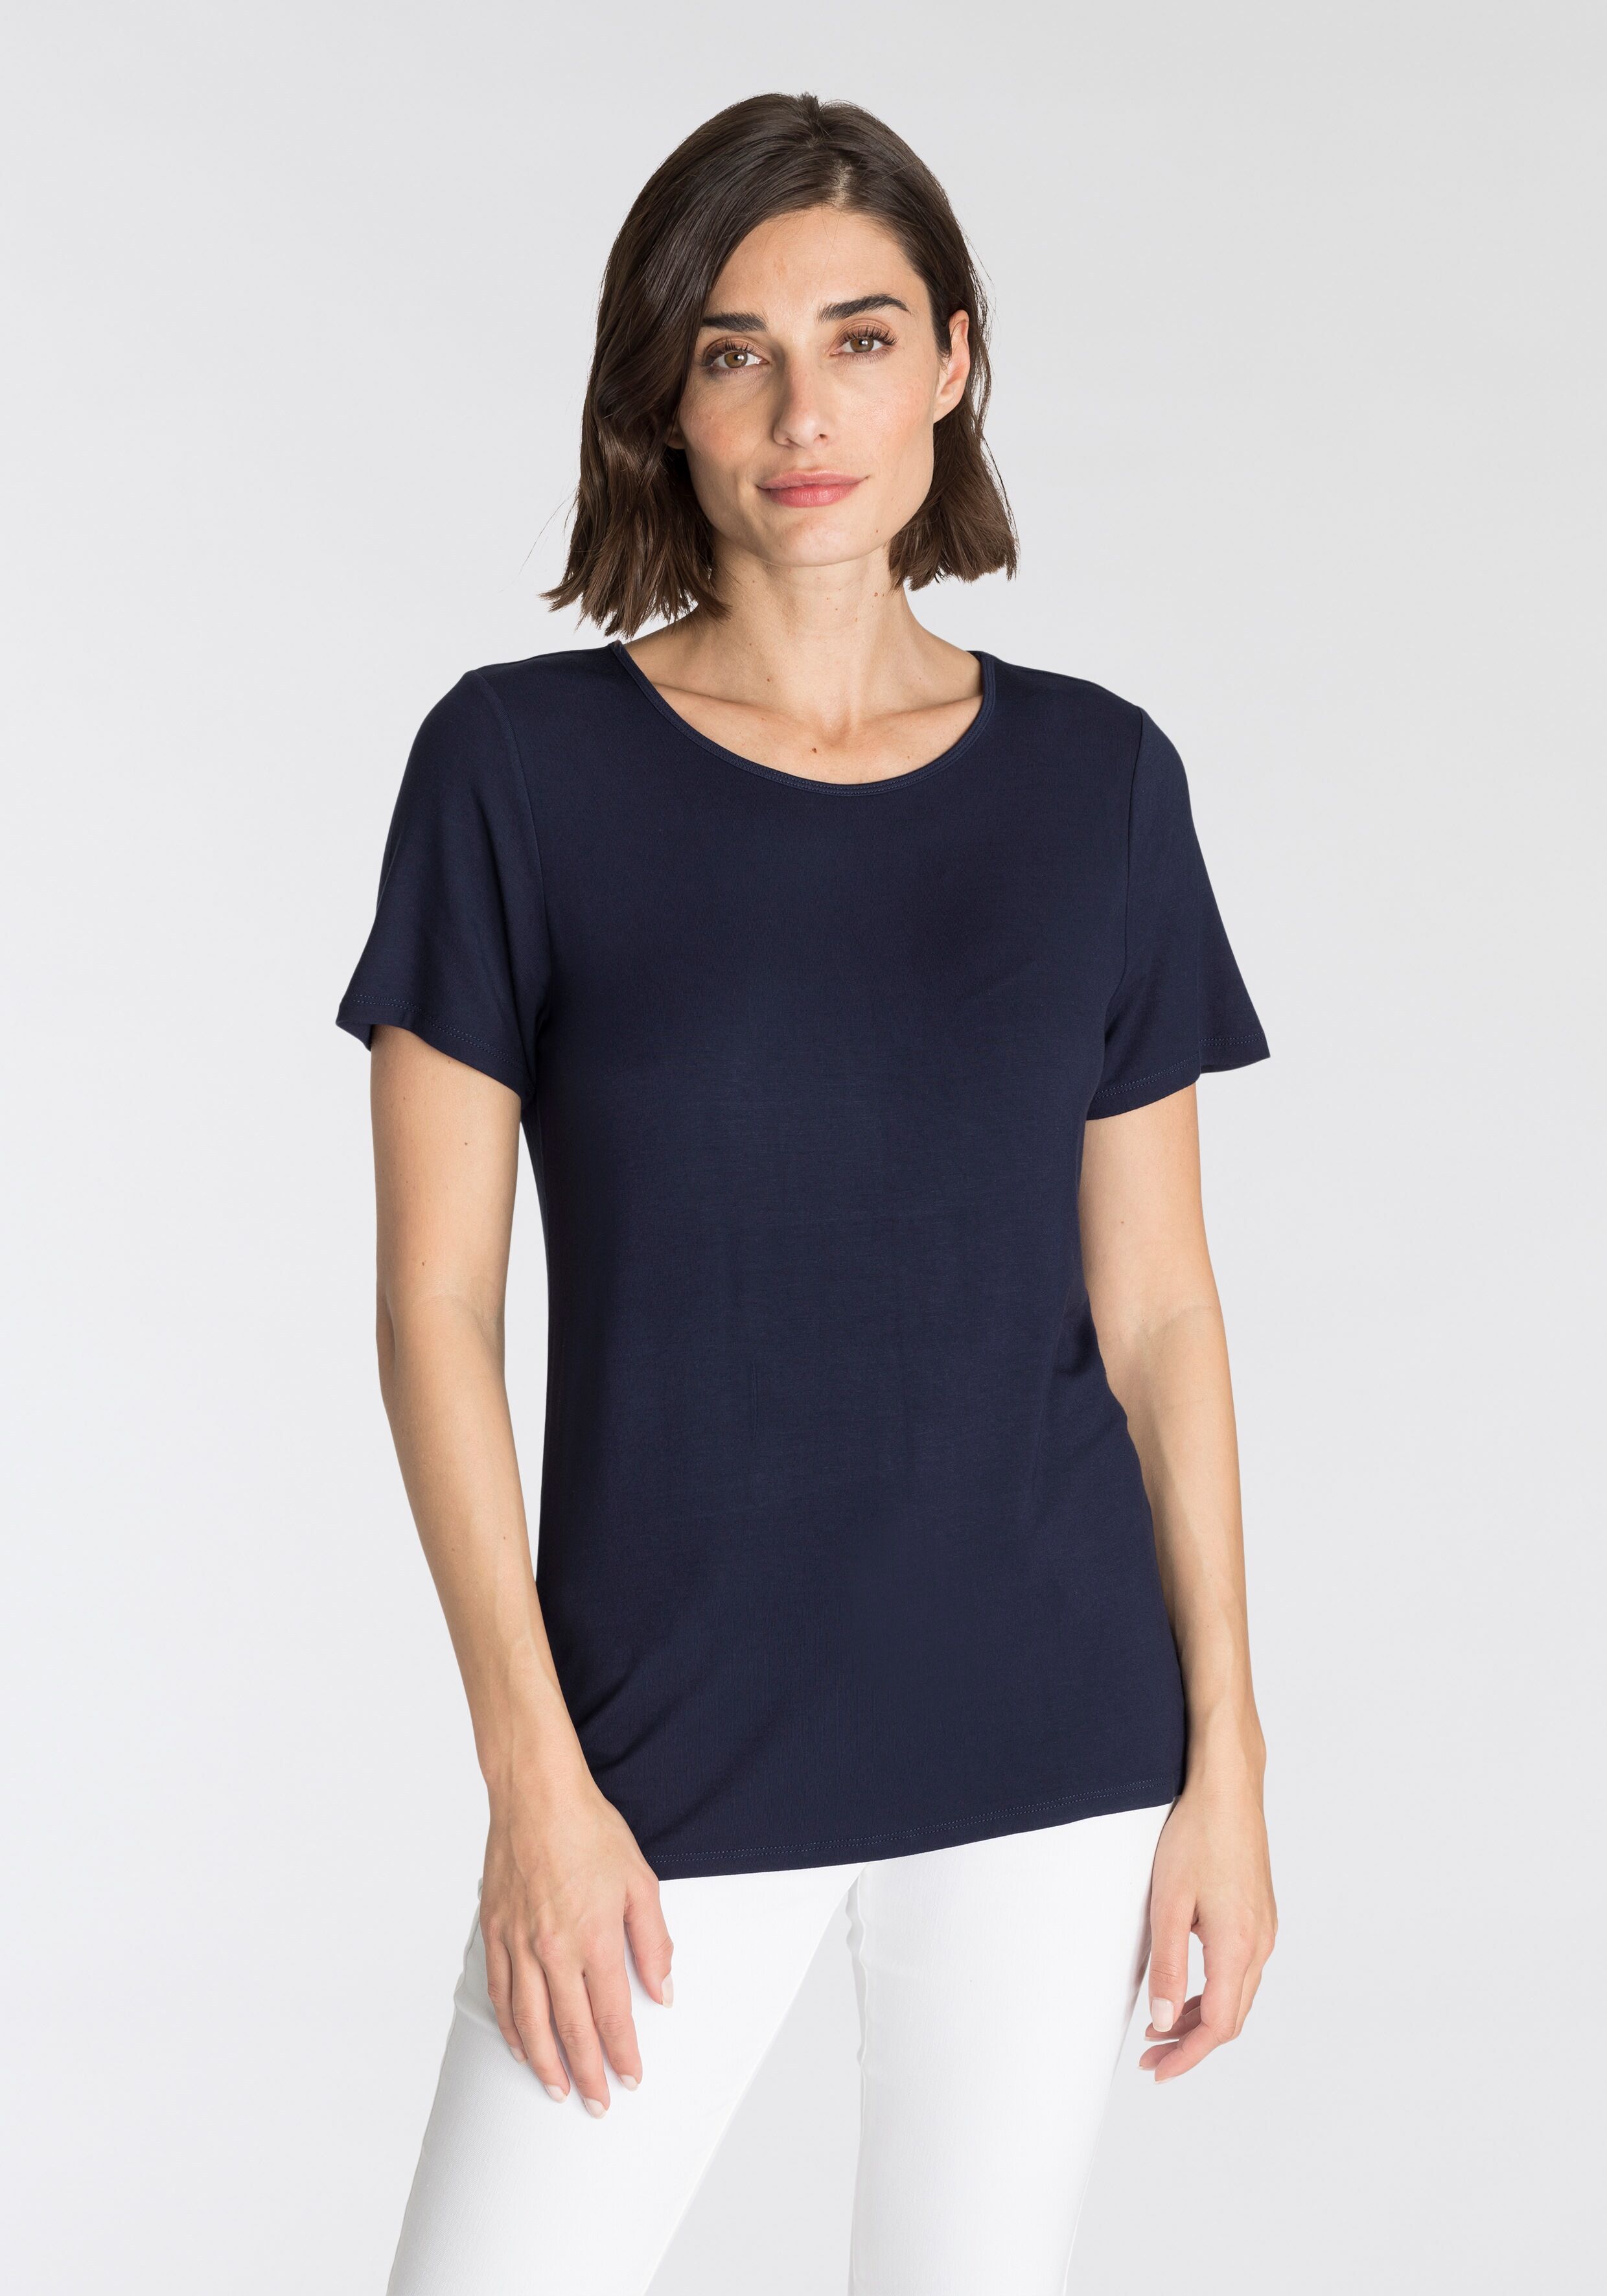 GOODproduct T-Shirt, nachhaltig aus LENZING™ ECOVERO™ Viskose blau Größe 36 38 40 42 44 46 48